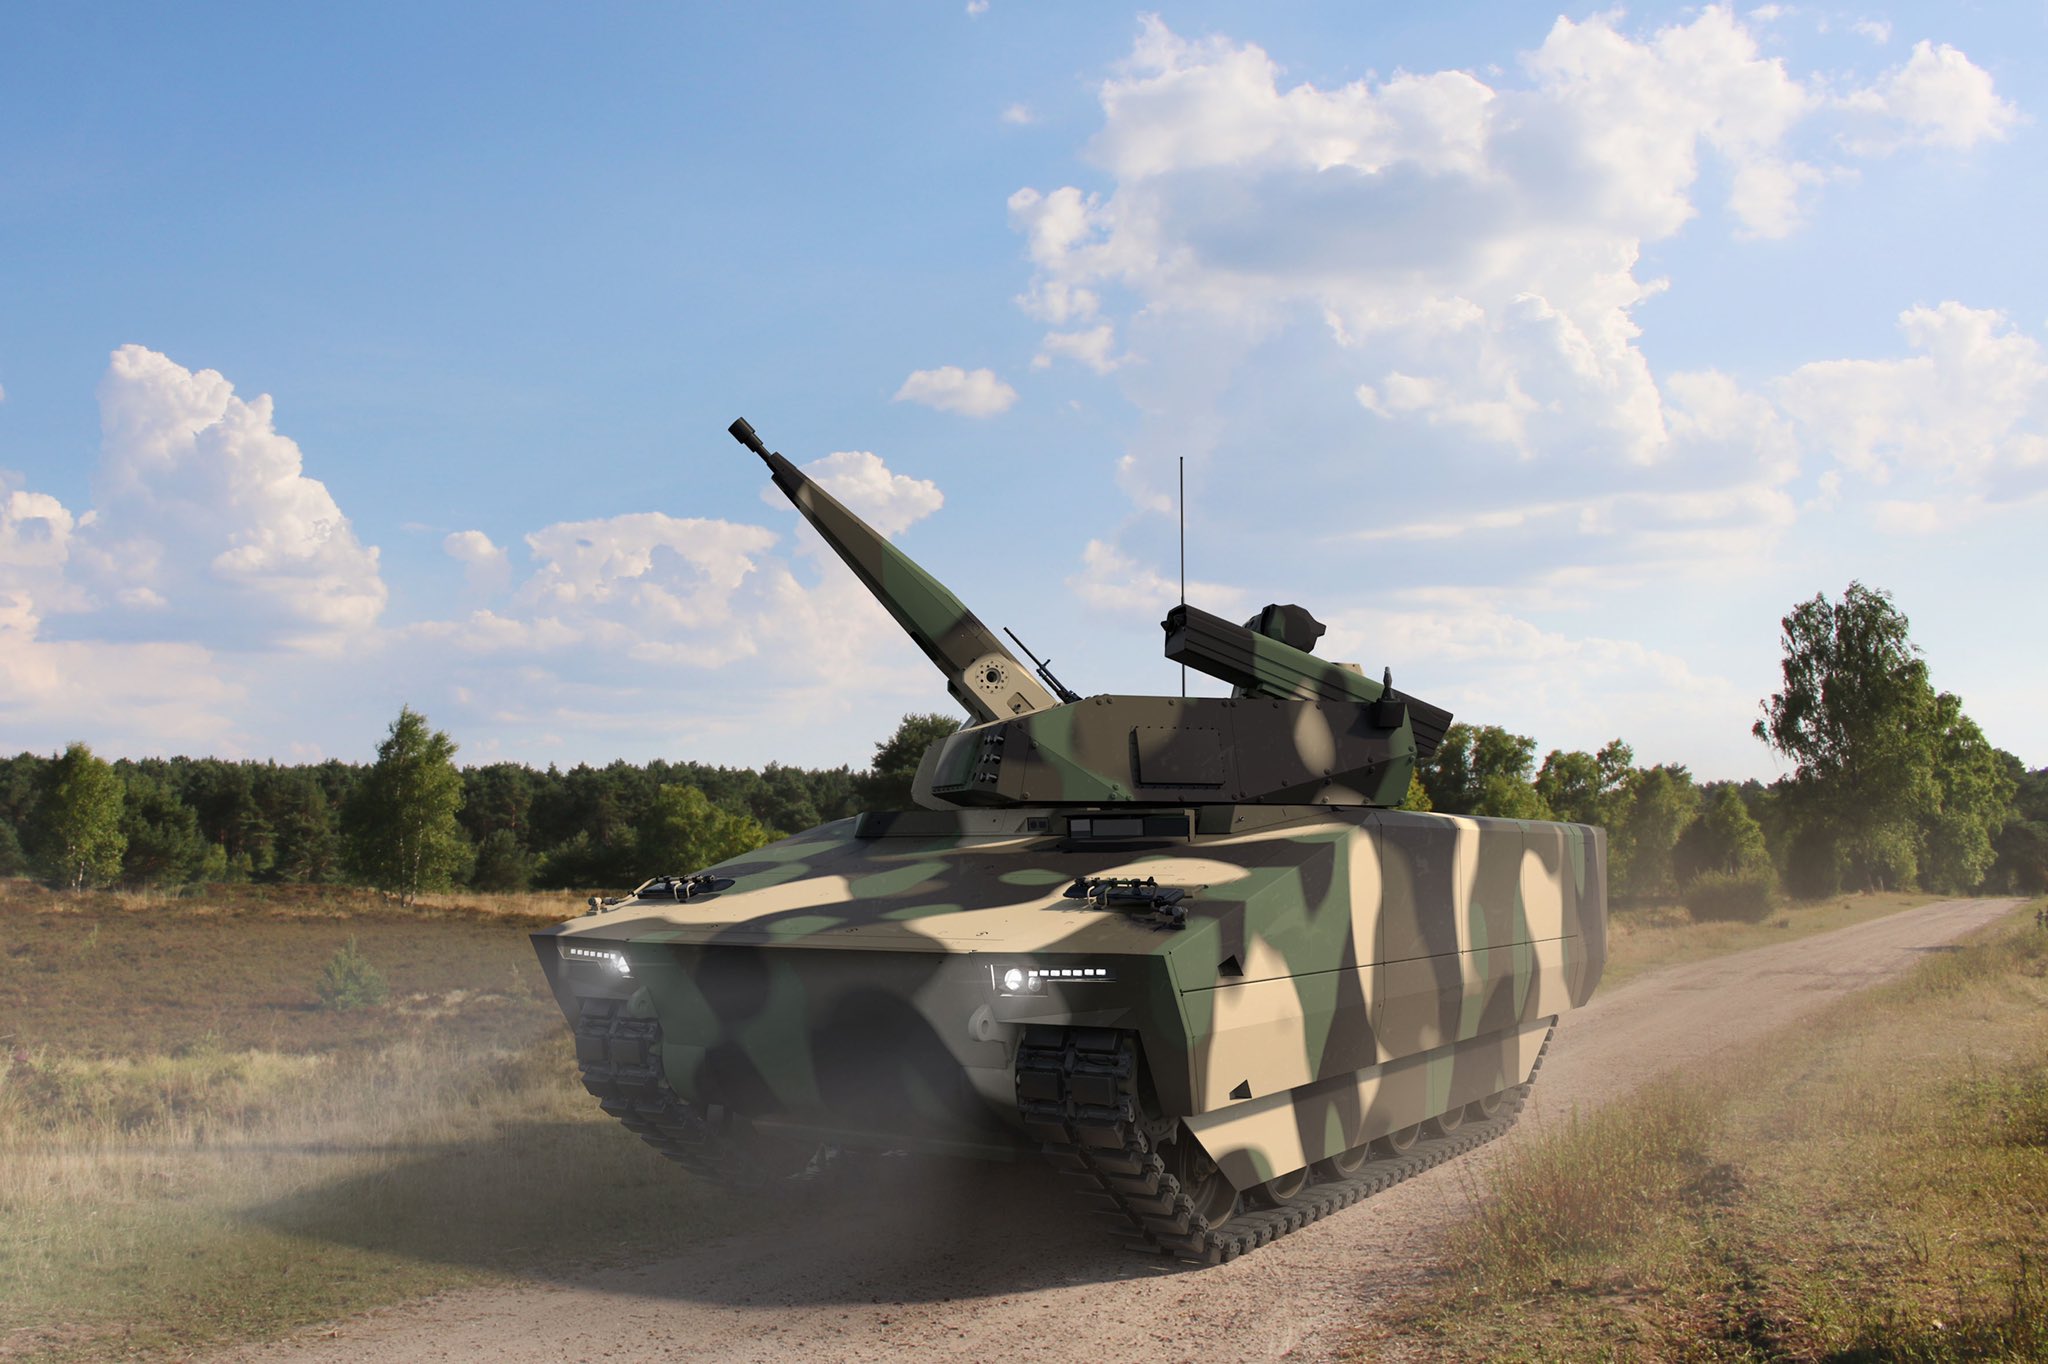 Skyranger turret mounted on Lynx infantry fighting vehicle.